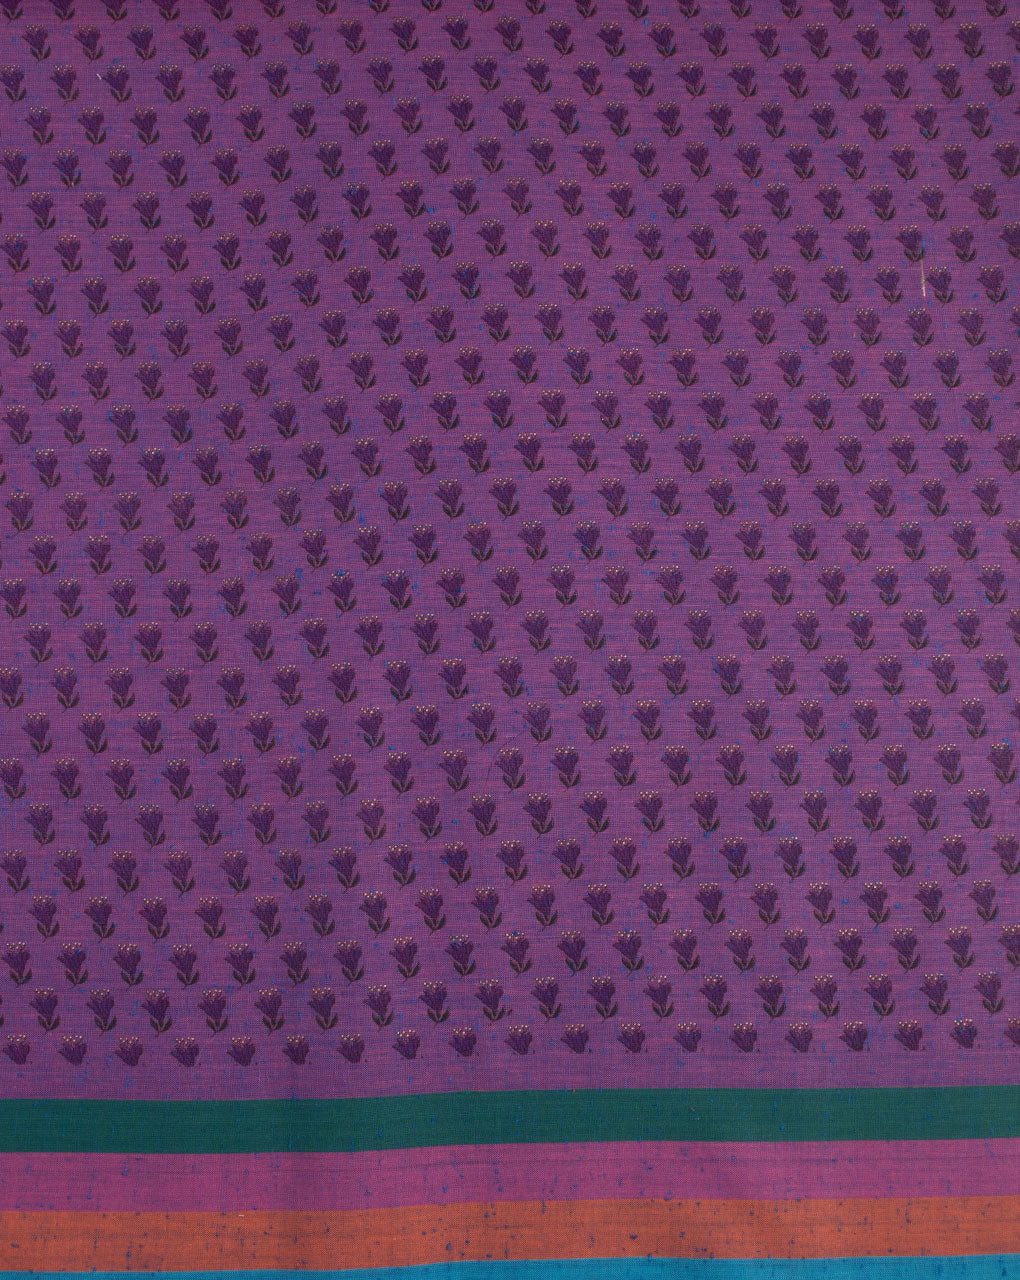 Foil Screen Print Bordered Loom Textured Cotton Fabric - Fabriclore.com